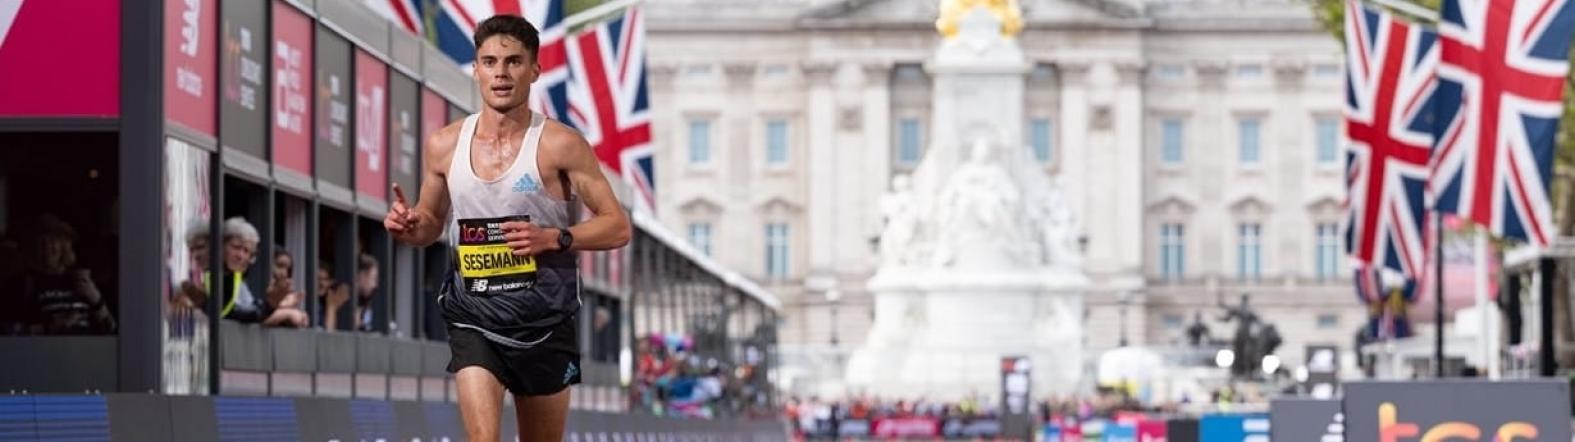 Runner nearing the finish line of the London Marathon